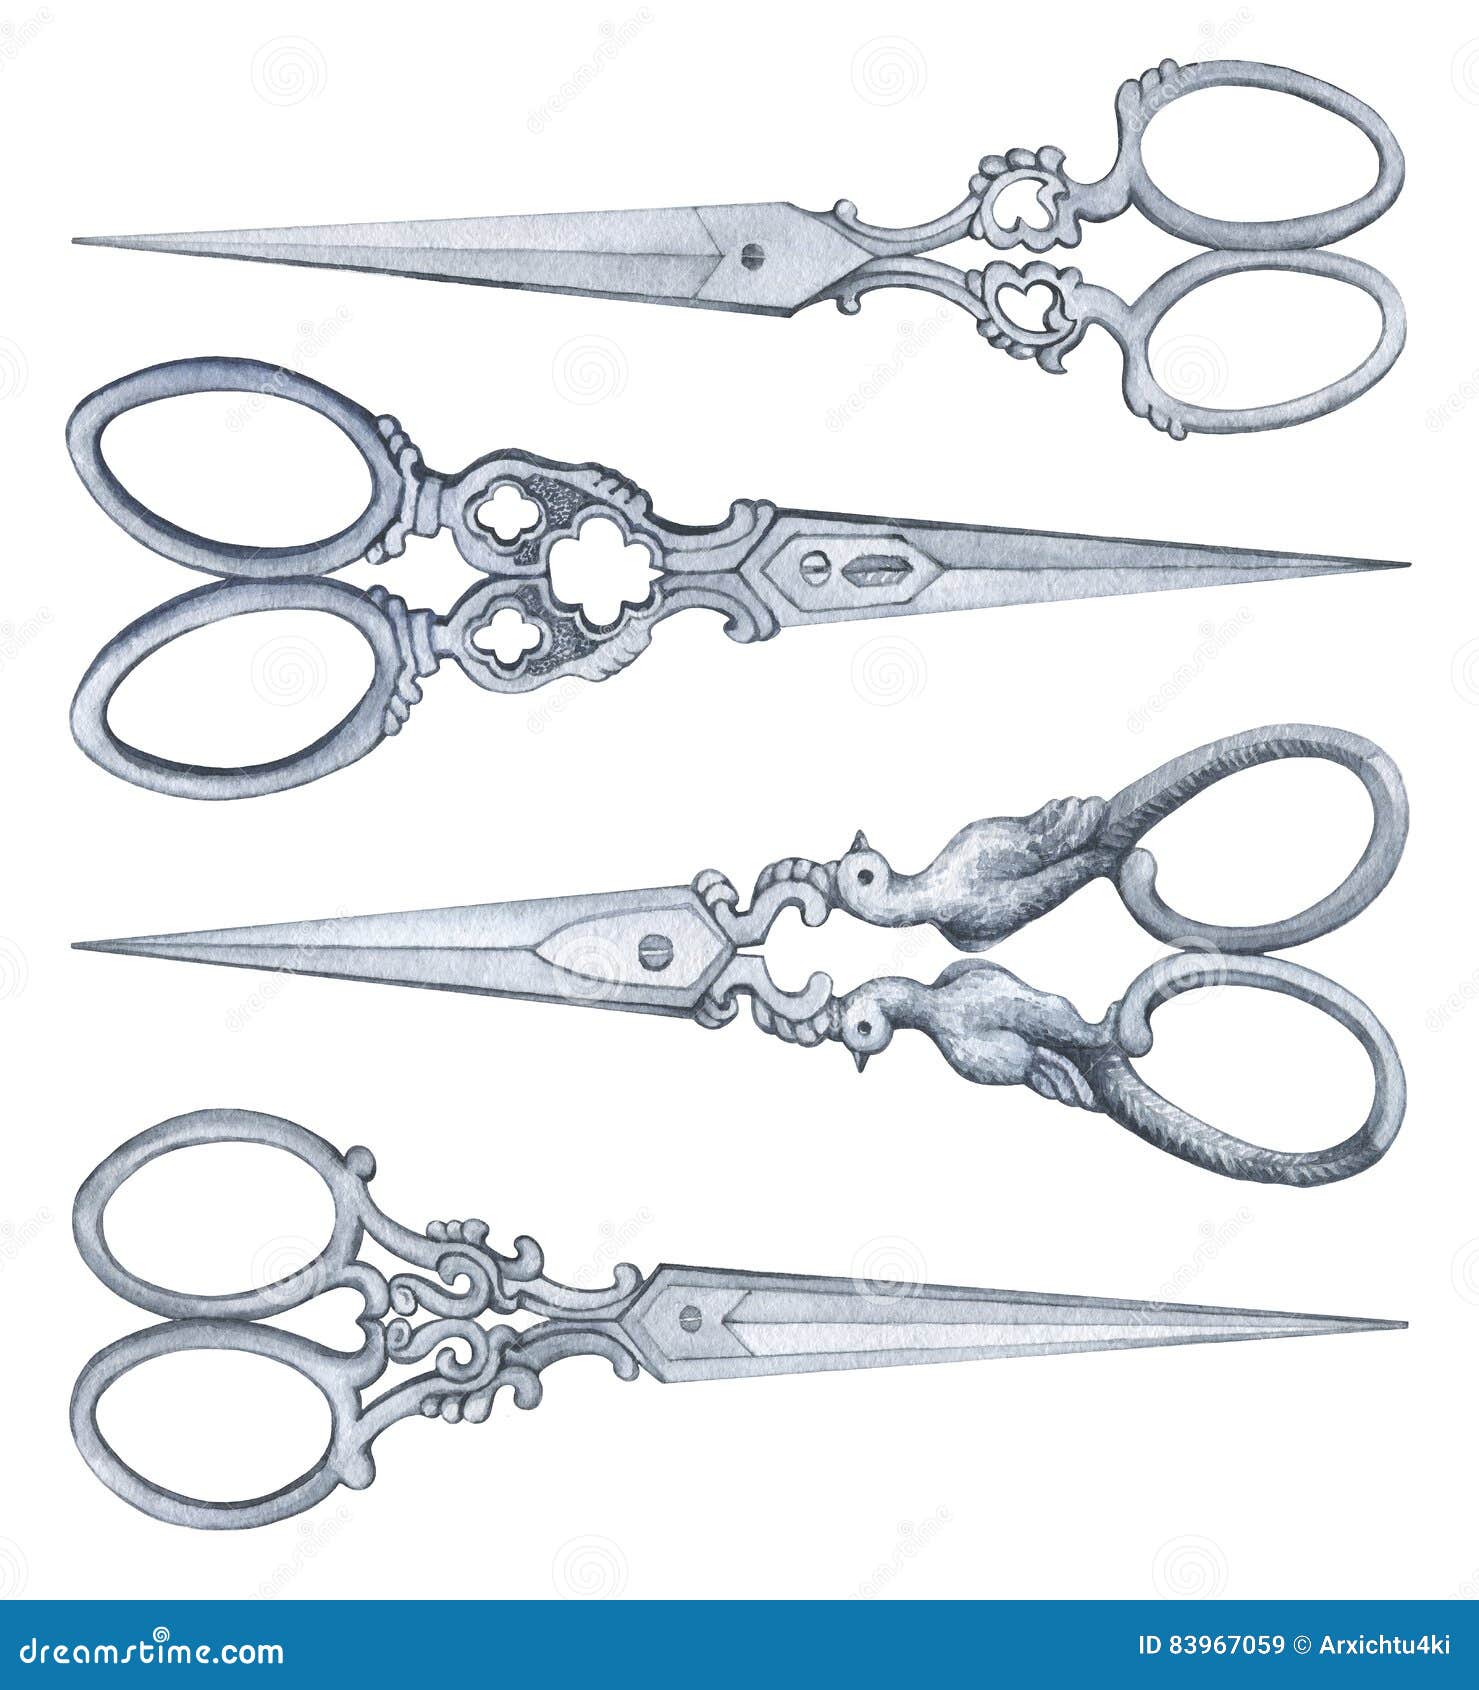 antique scissors - vintage accessory.